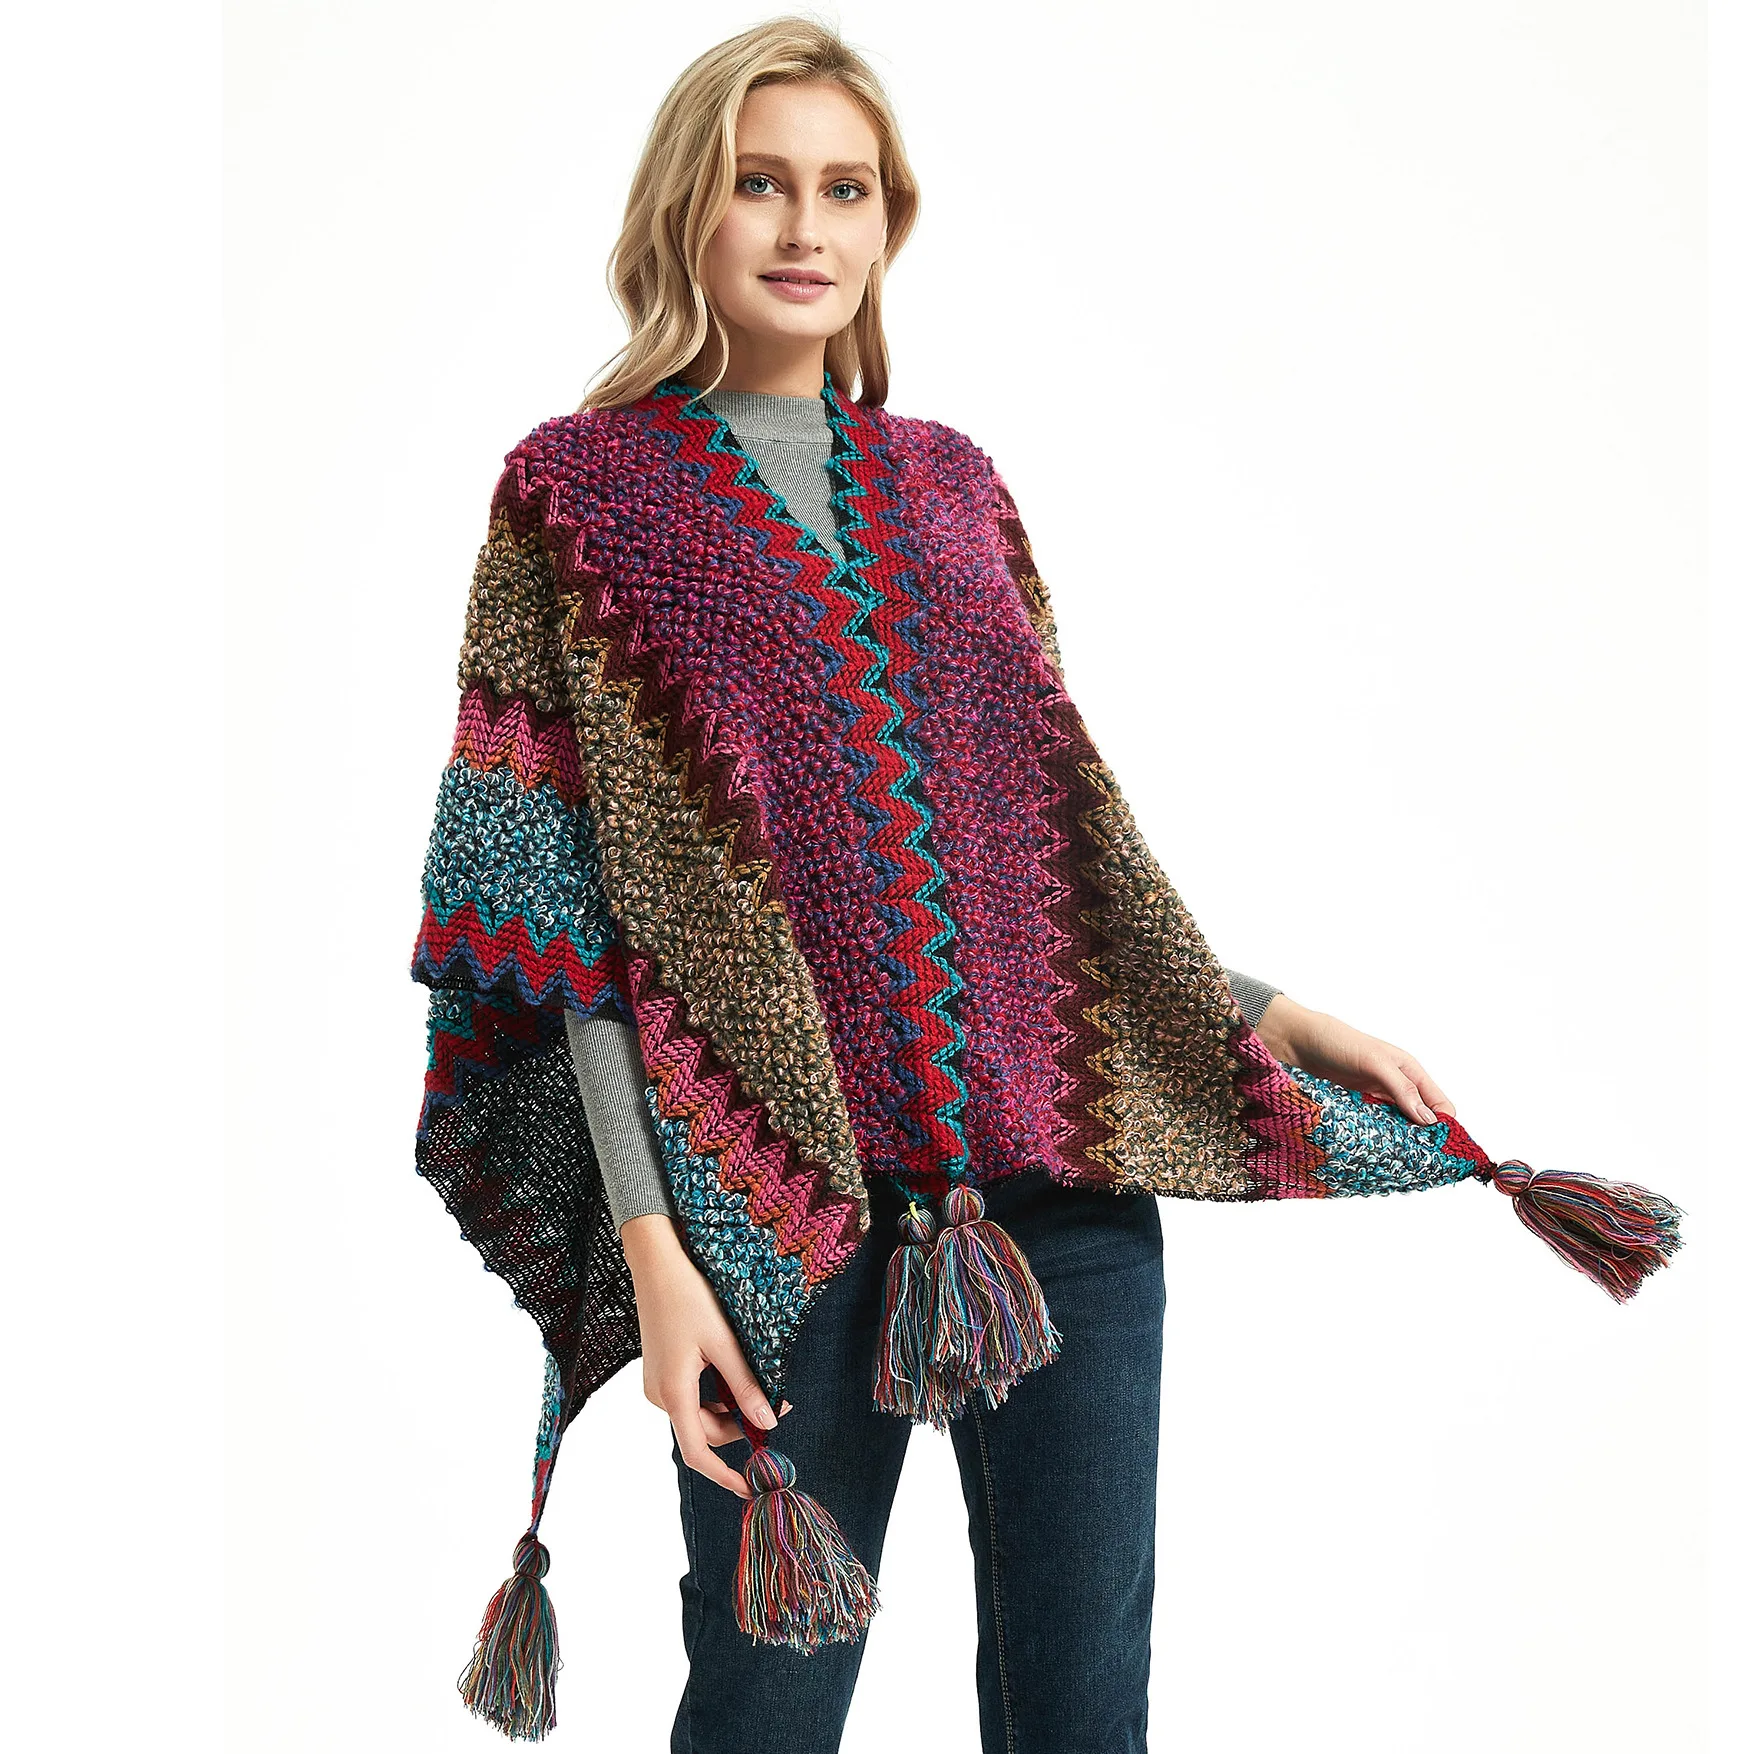 

Winter Women's Multi-Color Travel Retro Ethnic Style Knitted Shawl Cape Warm Tassel Scarf Poncho